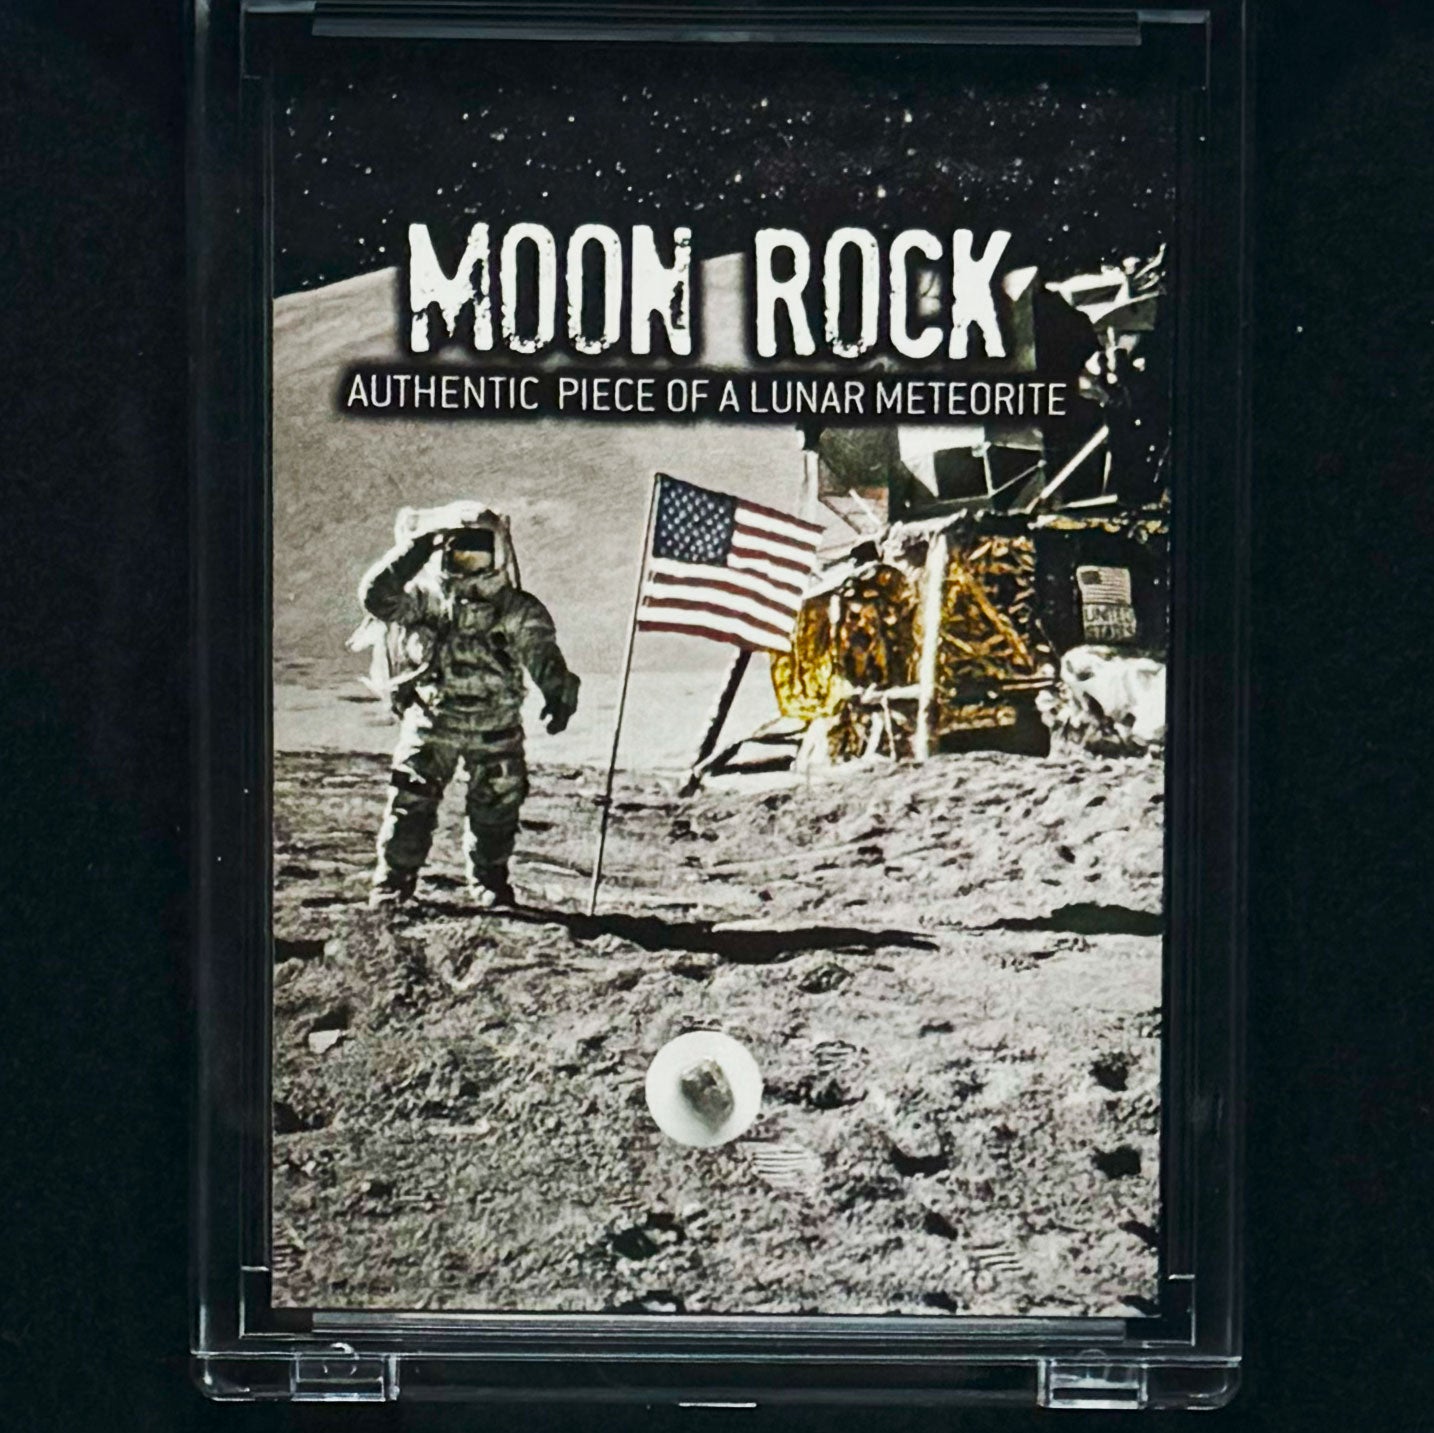 Lunar Meteorite in Collector's Box